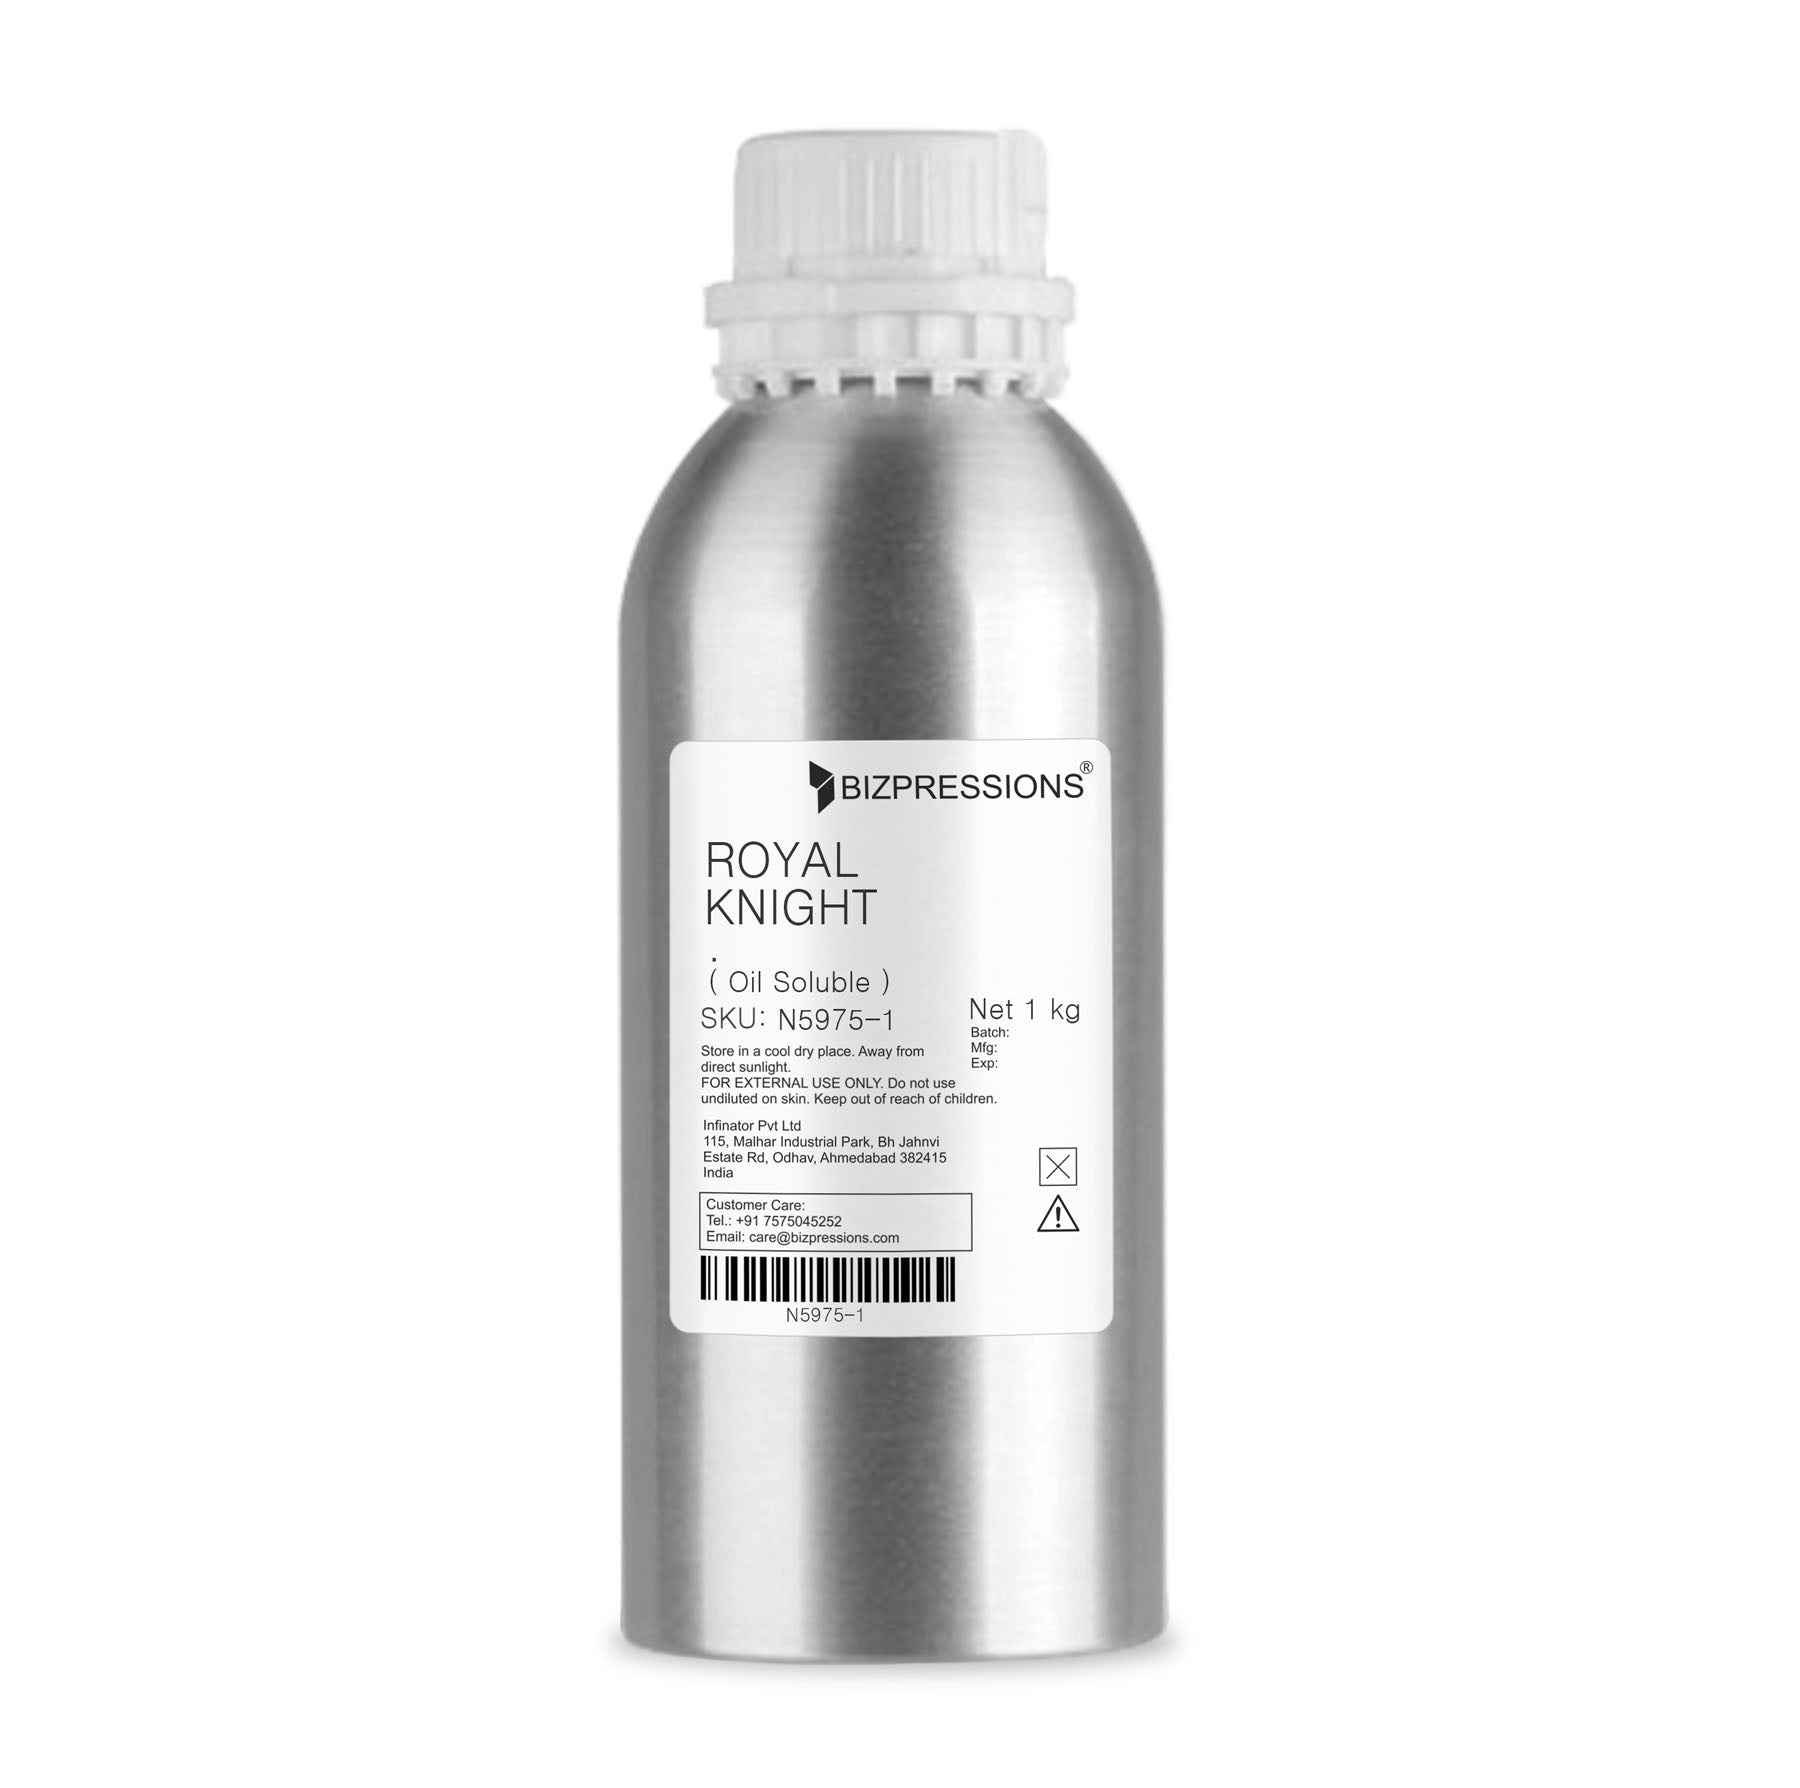 ROYAL KNIGHT - Fragrance ( Oil Soluble ) - 1 kg